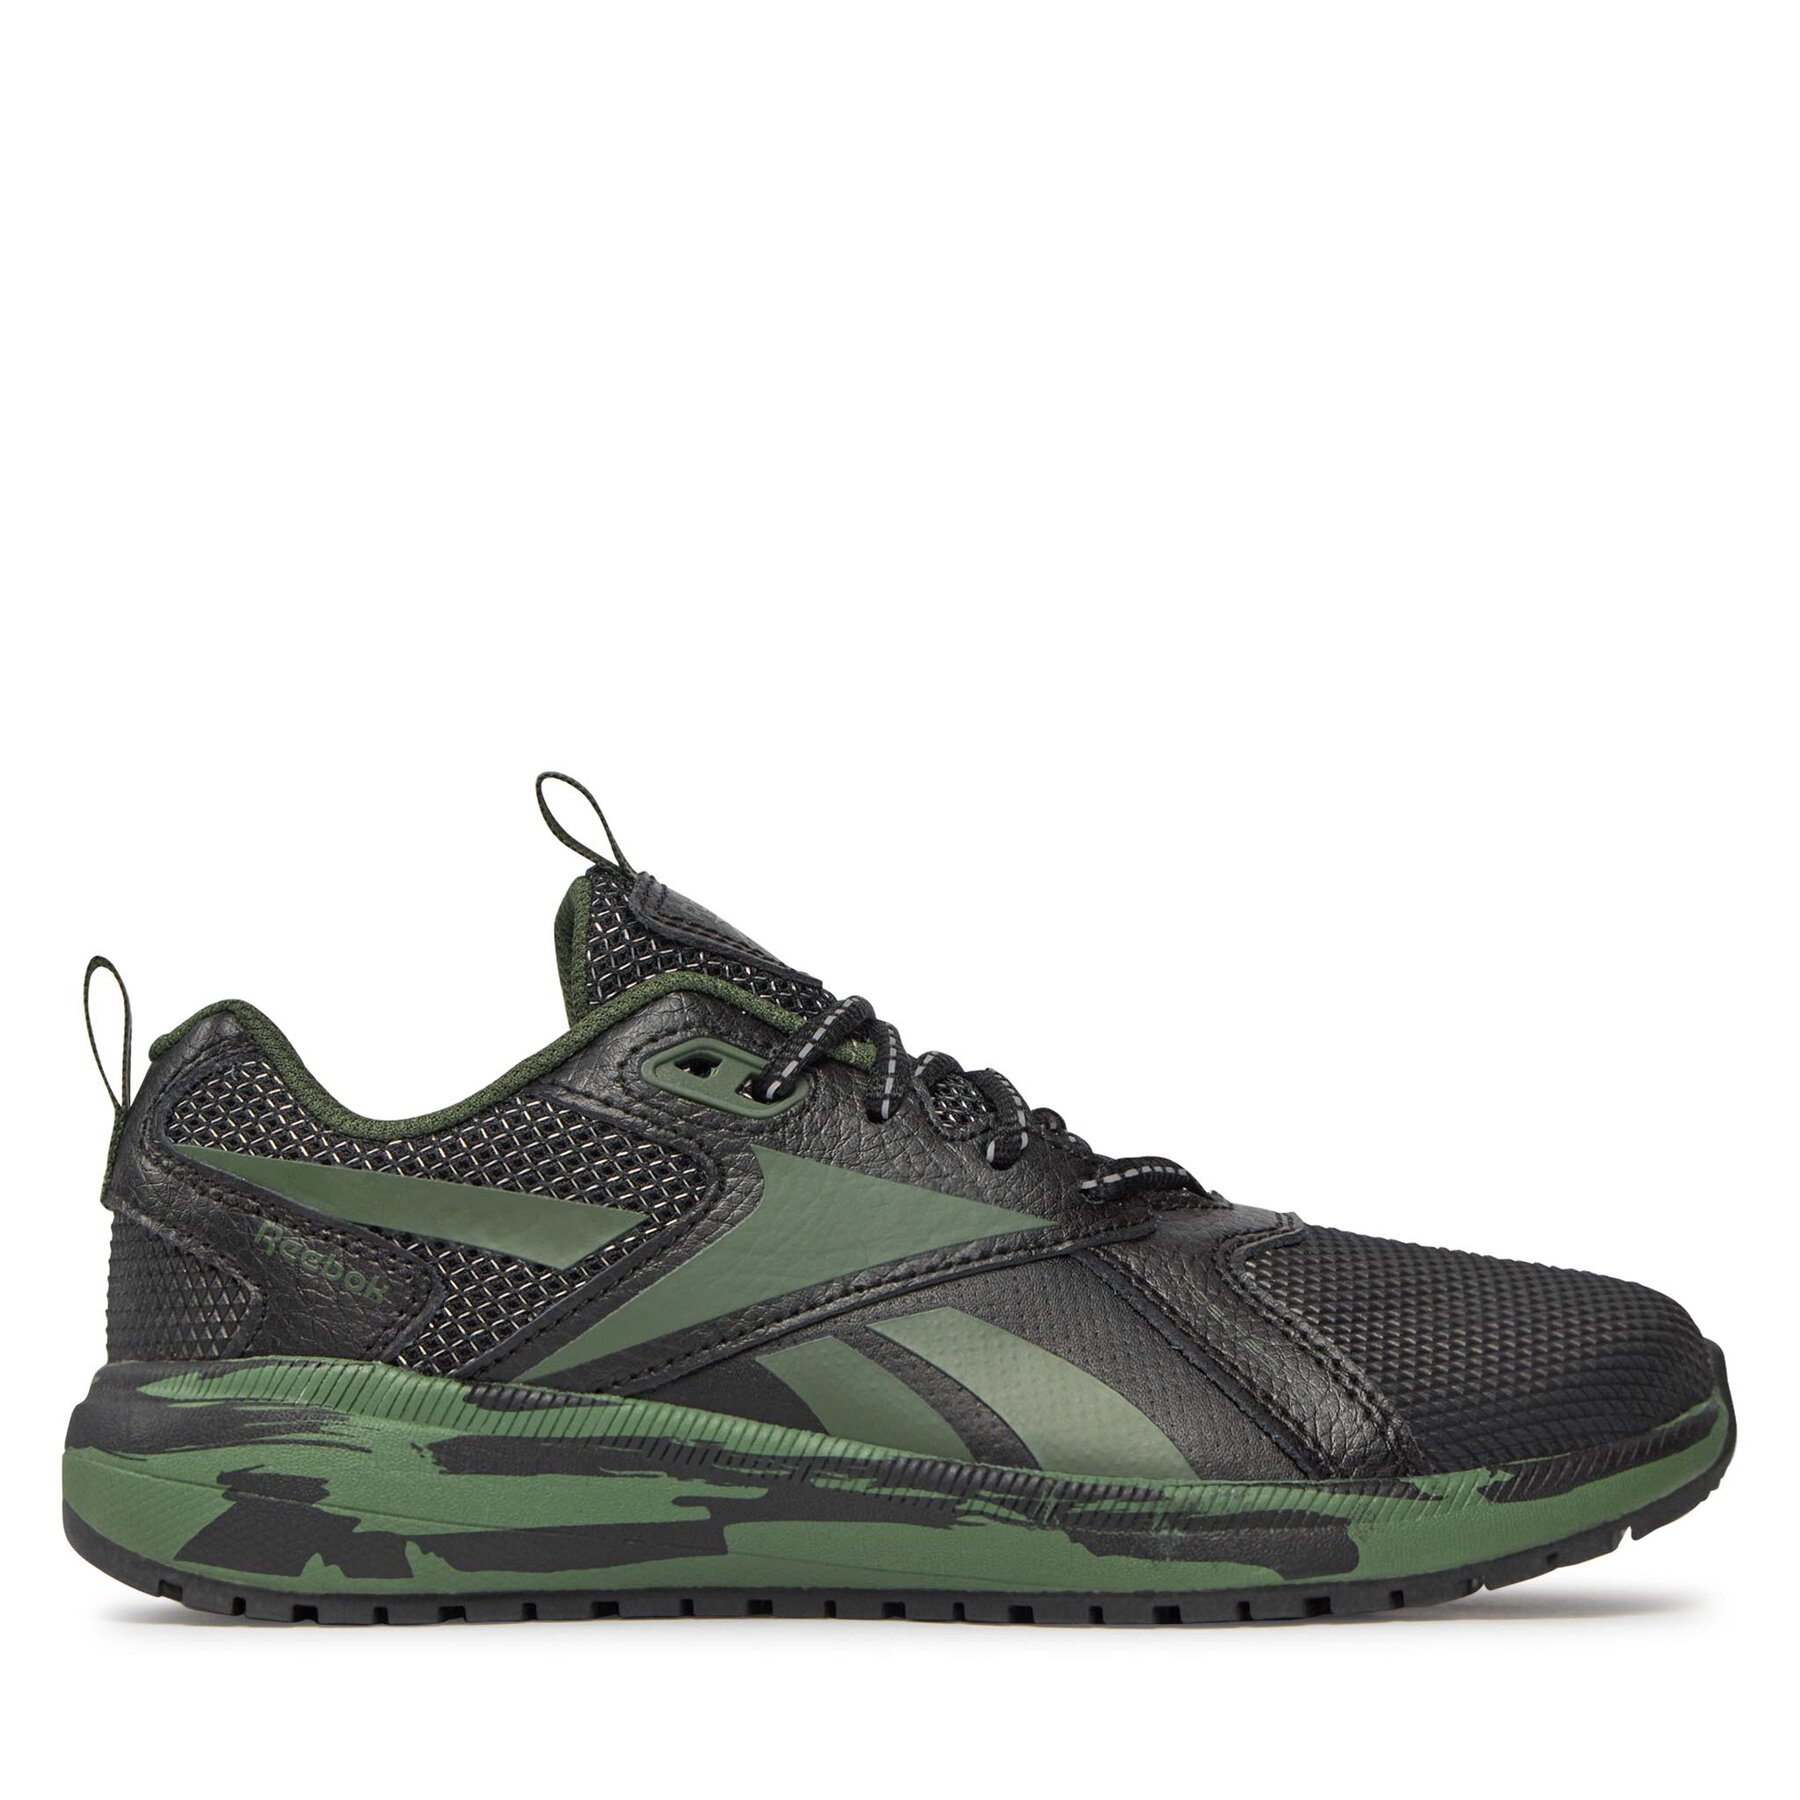 Schuhe Reebok Durable Xt IE4187 Green von Reebok